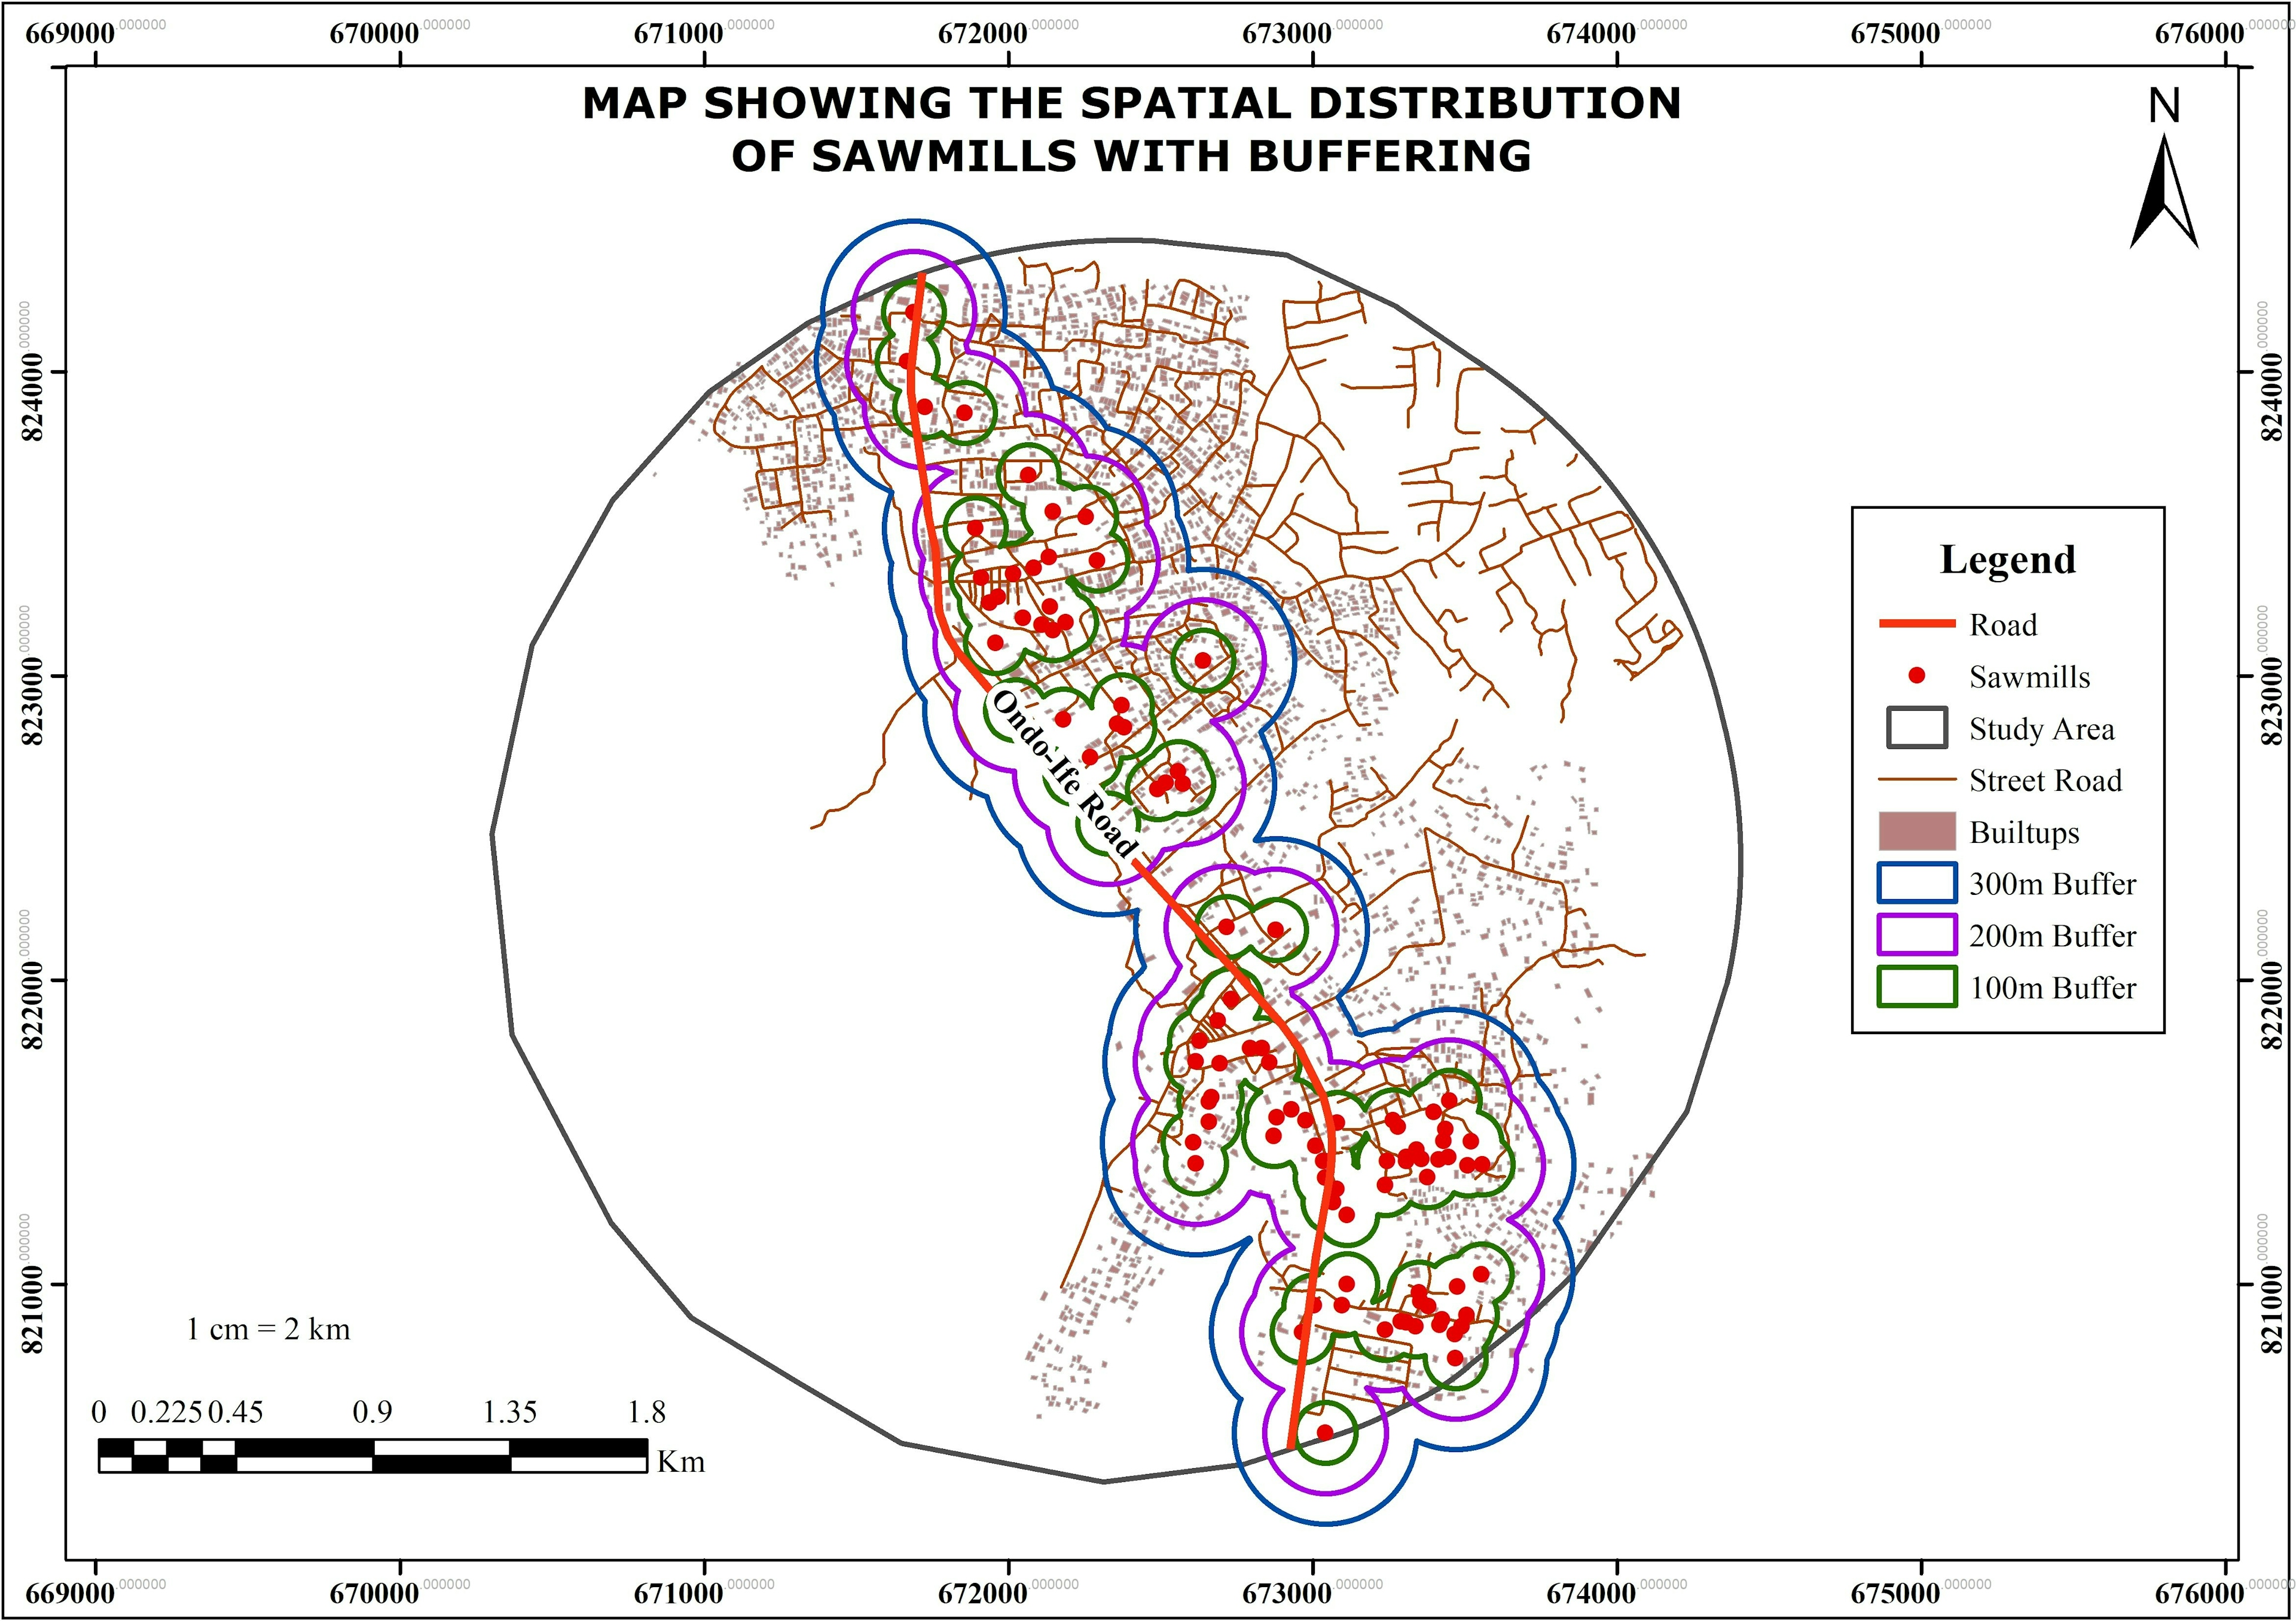 Spatial Distribution of Sawmills